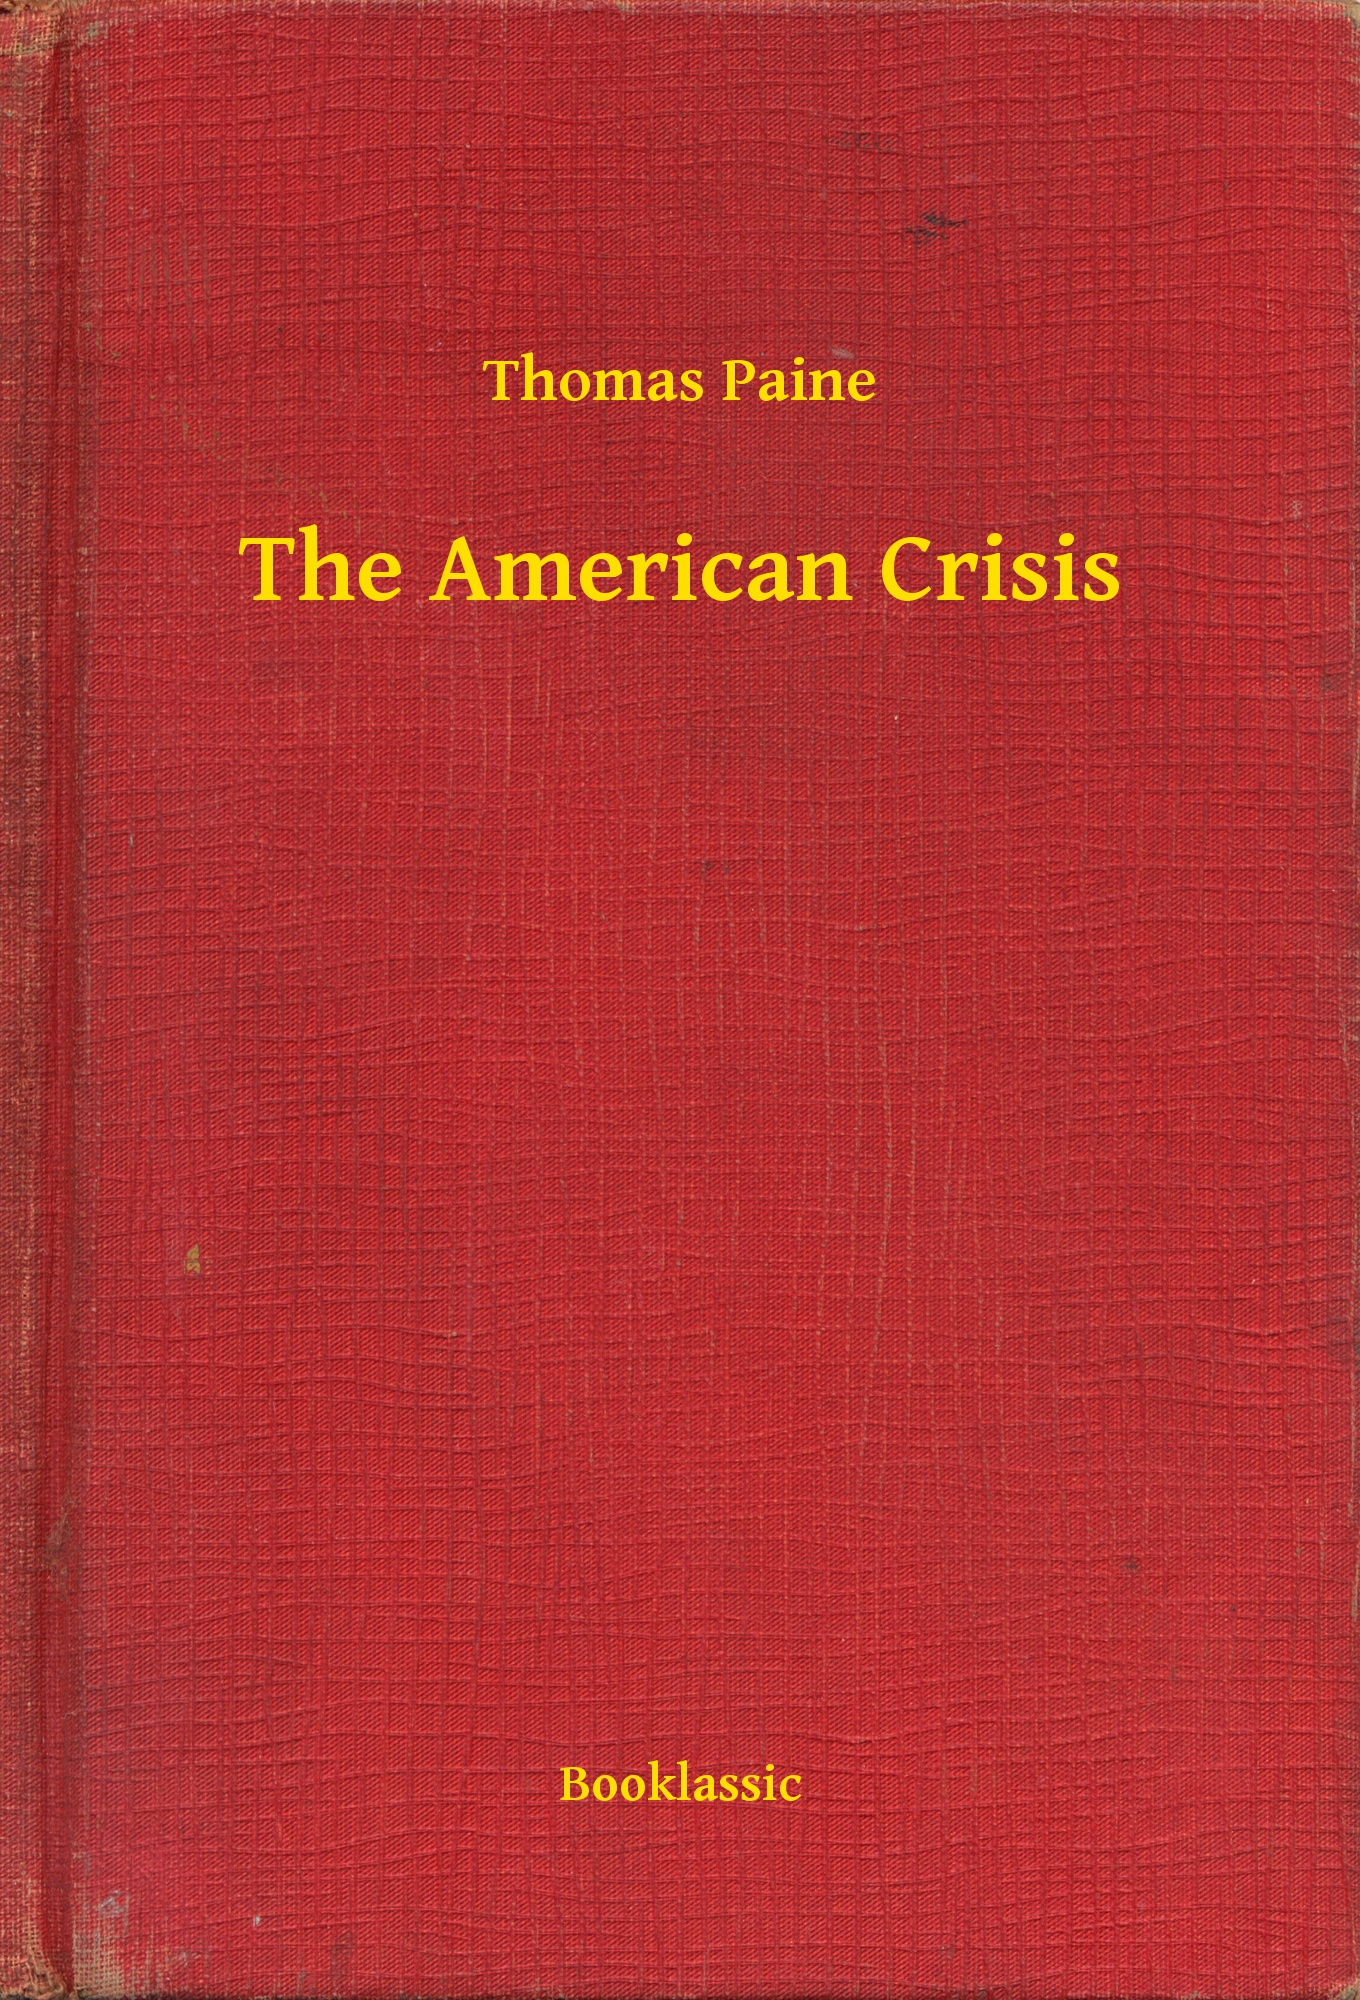 The American Crisis